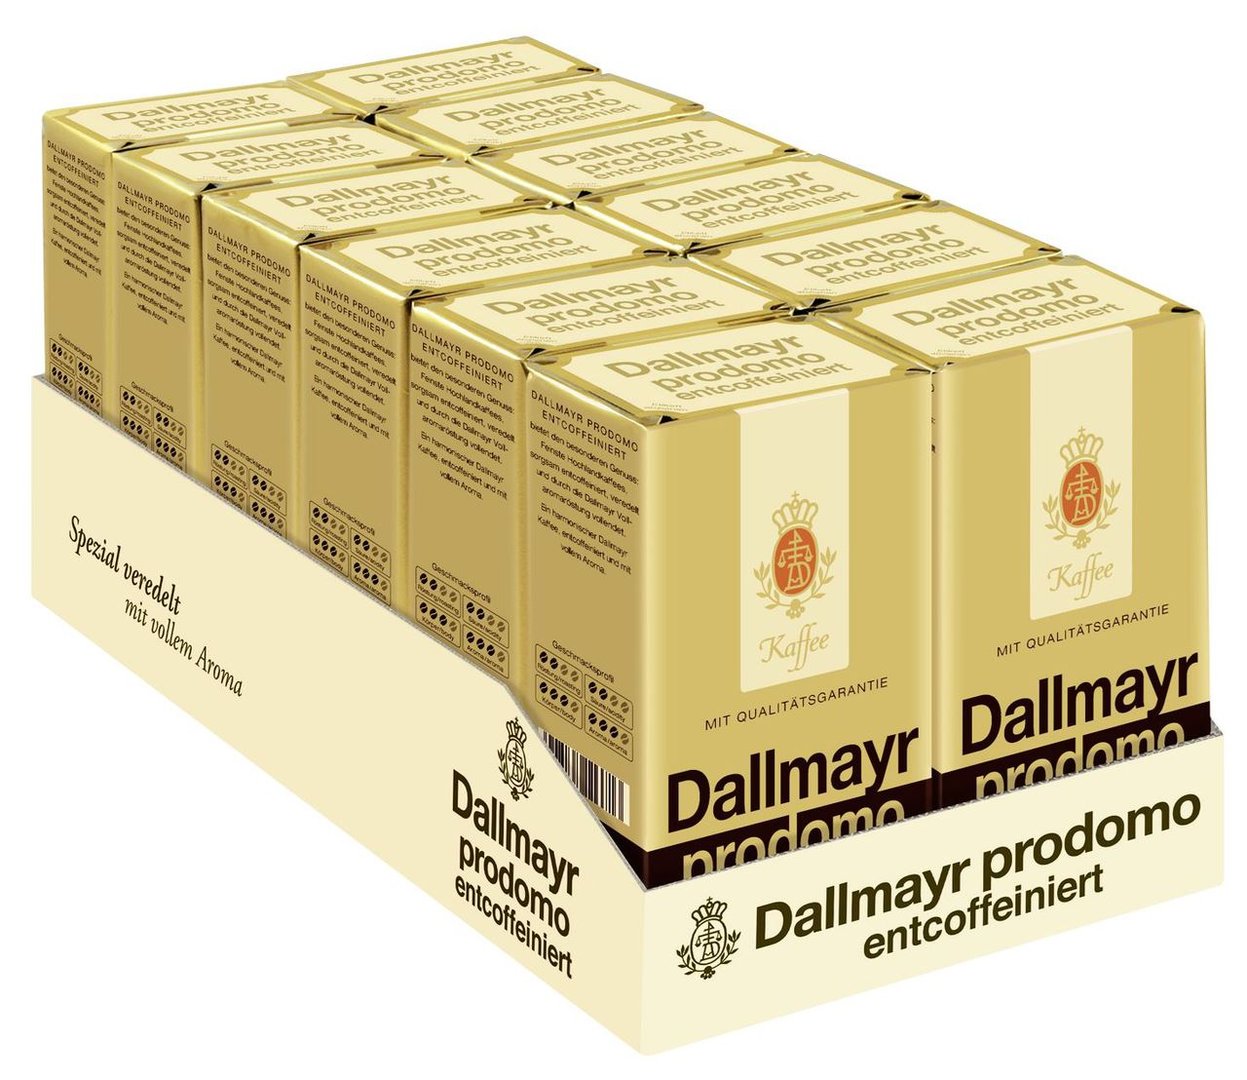 Dallmayr Prodomo entcoffeiniert, gemahlen, vak.-verpackt 12 x 500 g Packungen